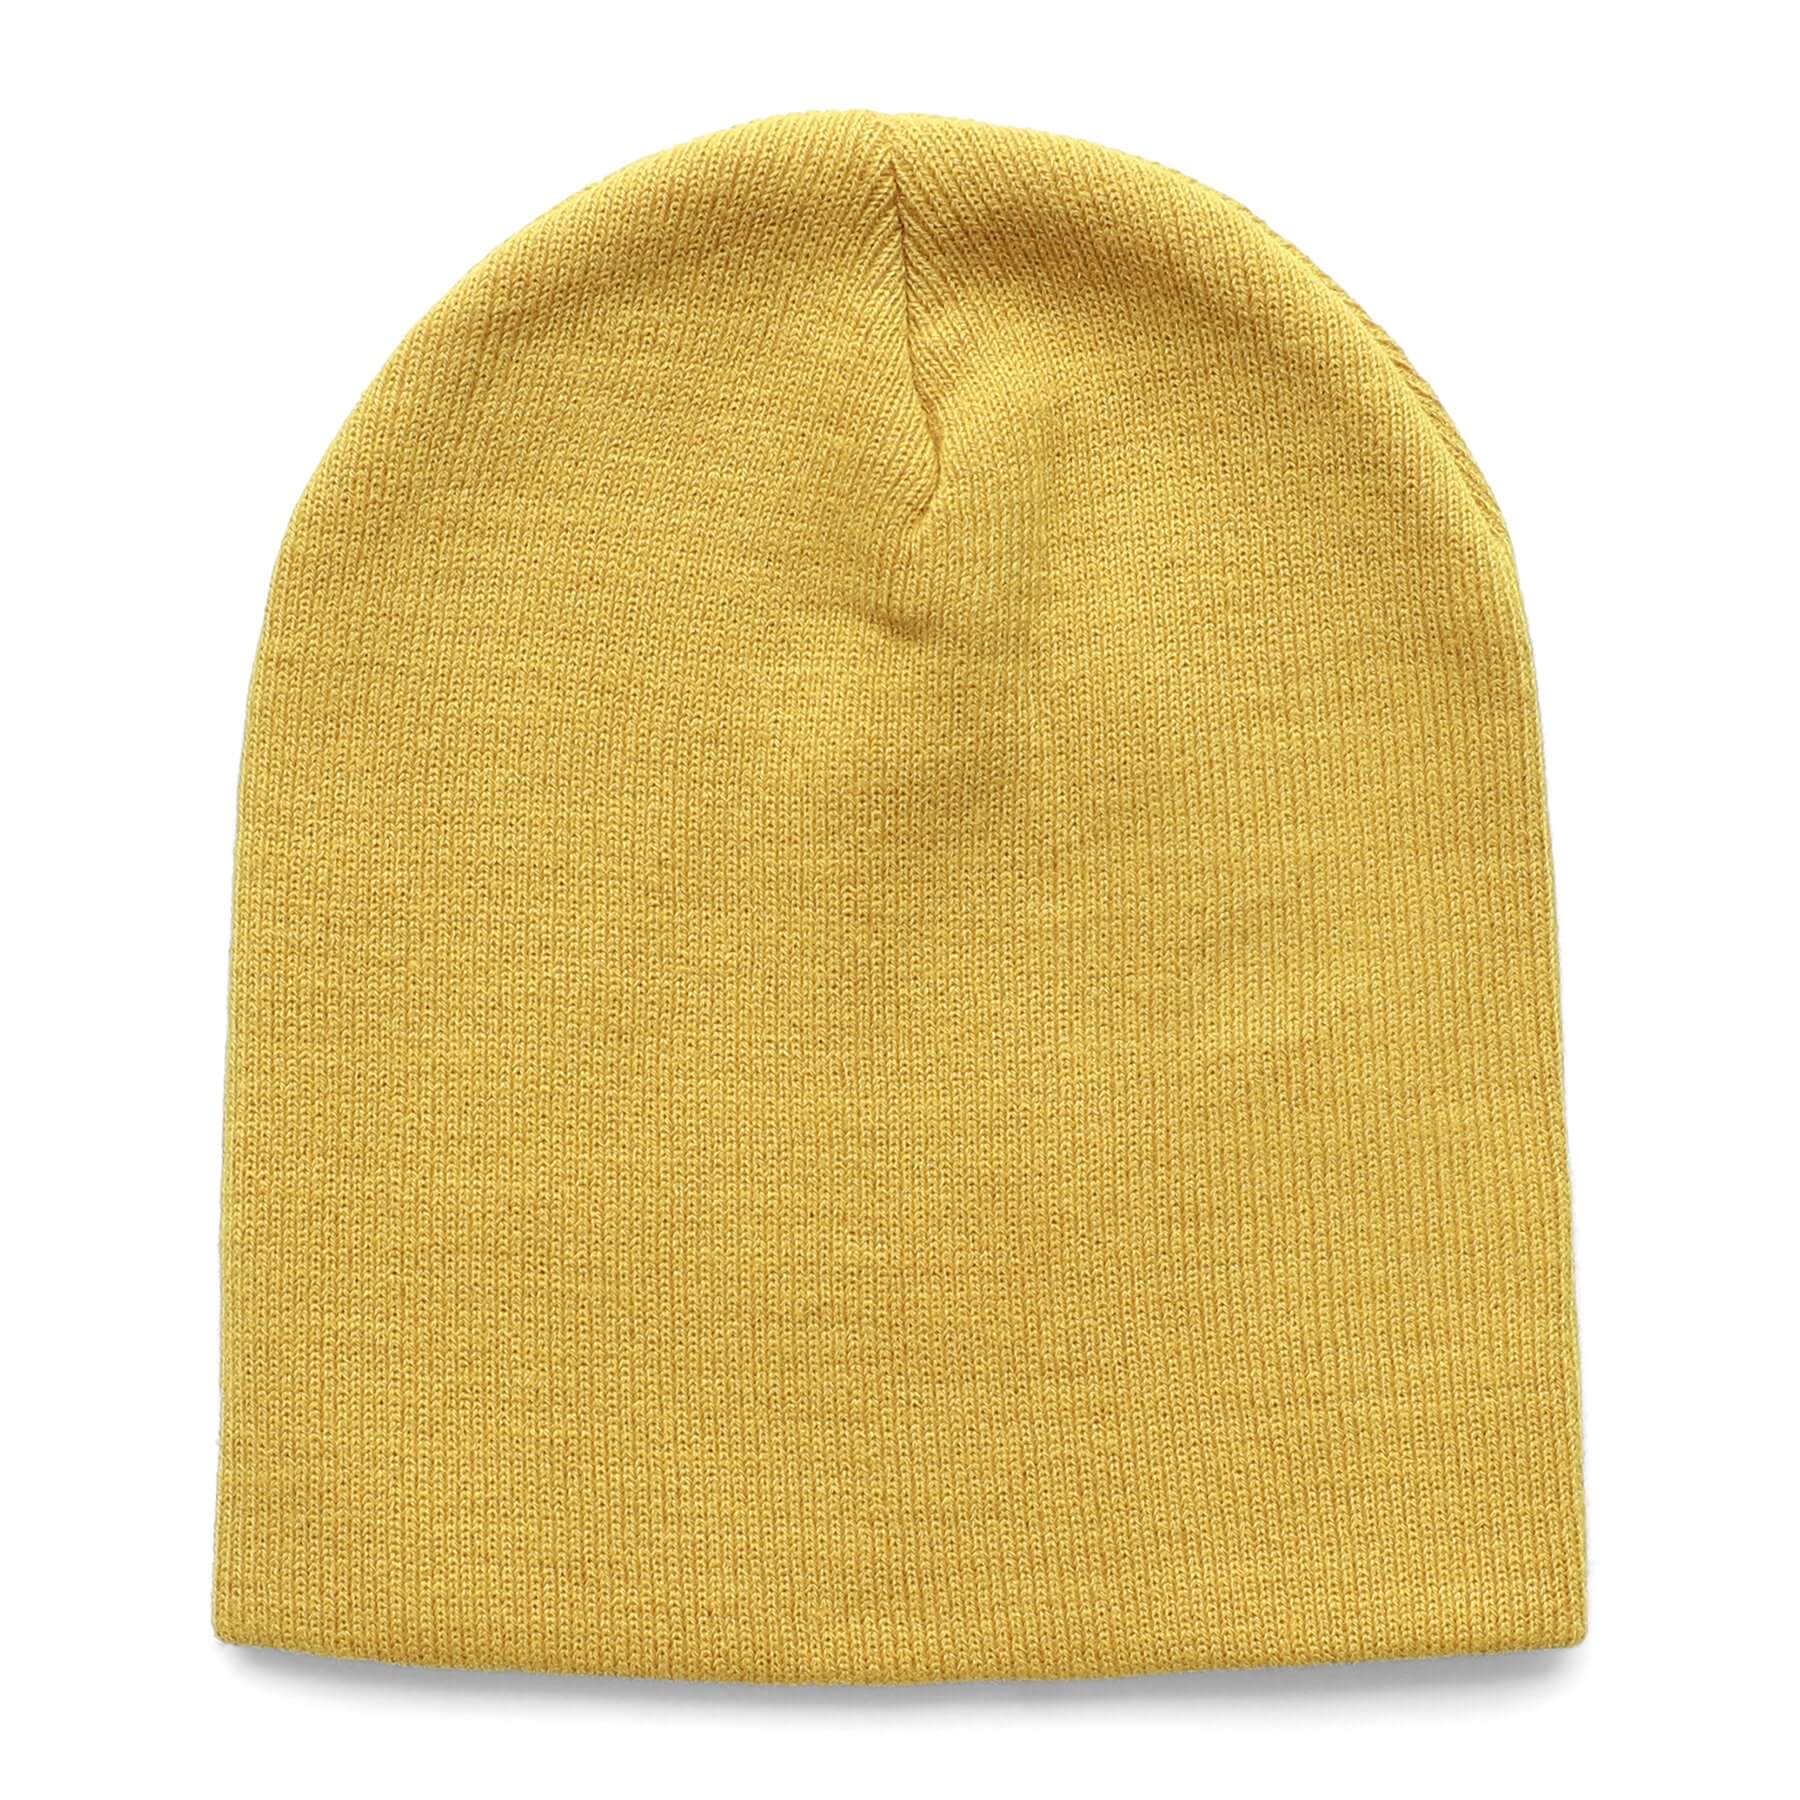 Dubinik casual knitted cotton cap #2016